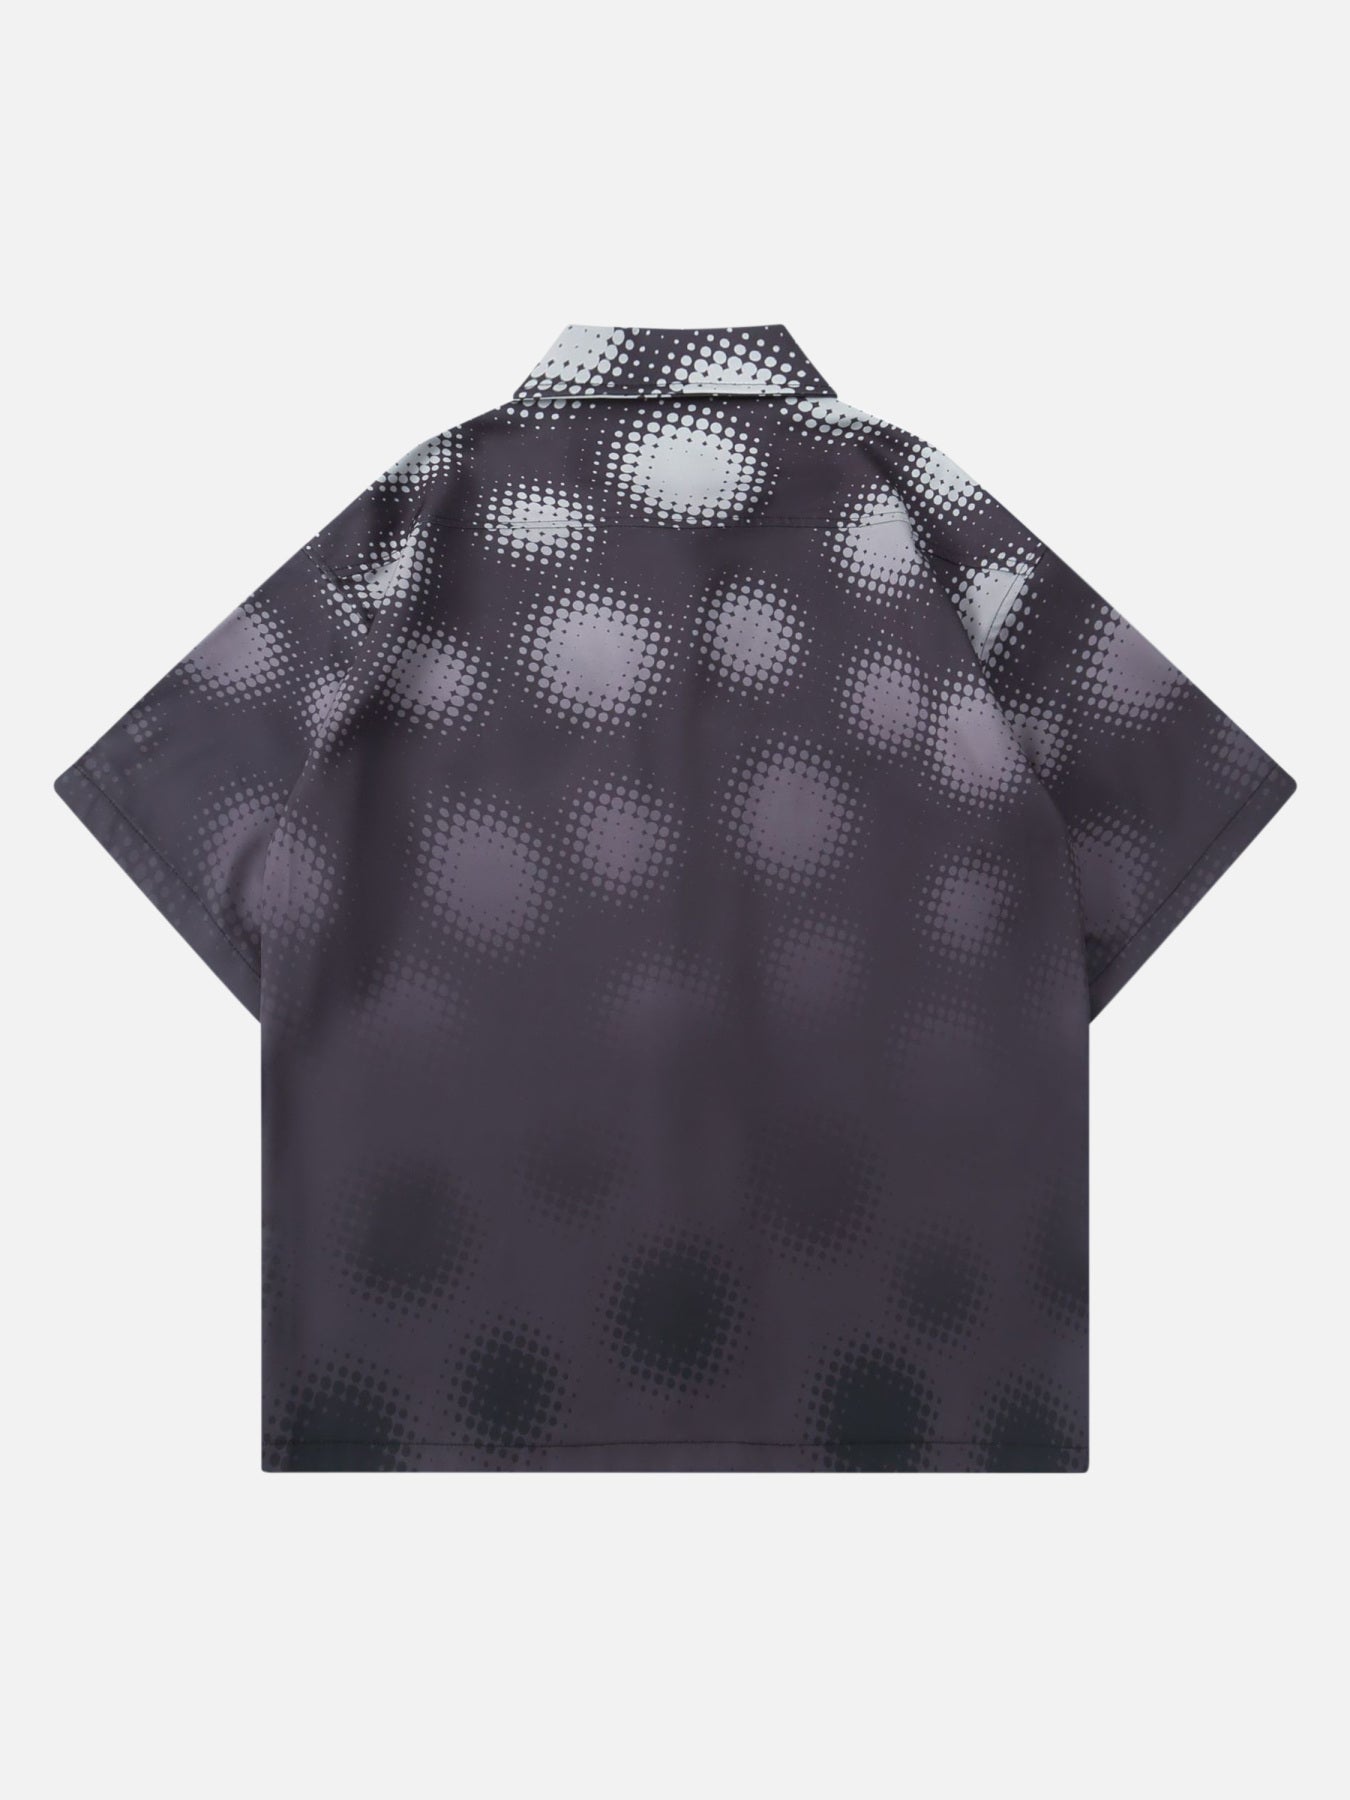 The Supermade Polka Dot Short Sleeve Shirt